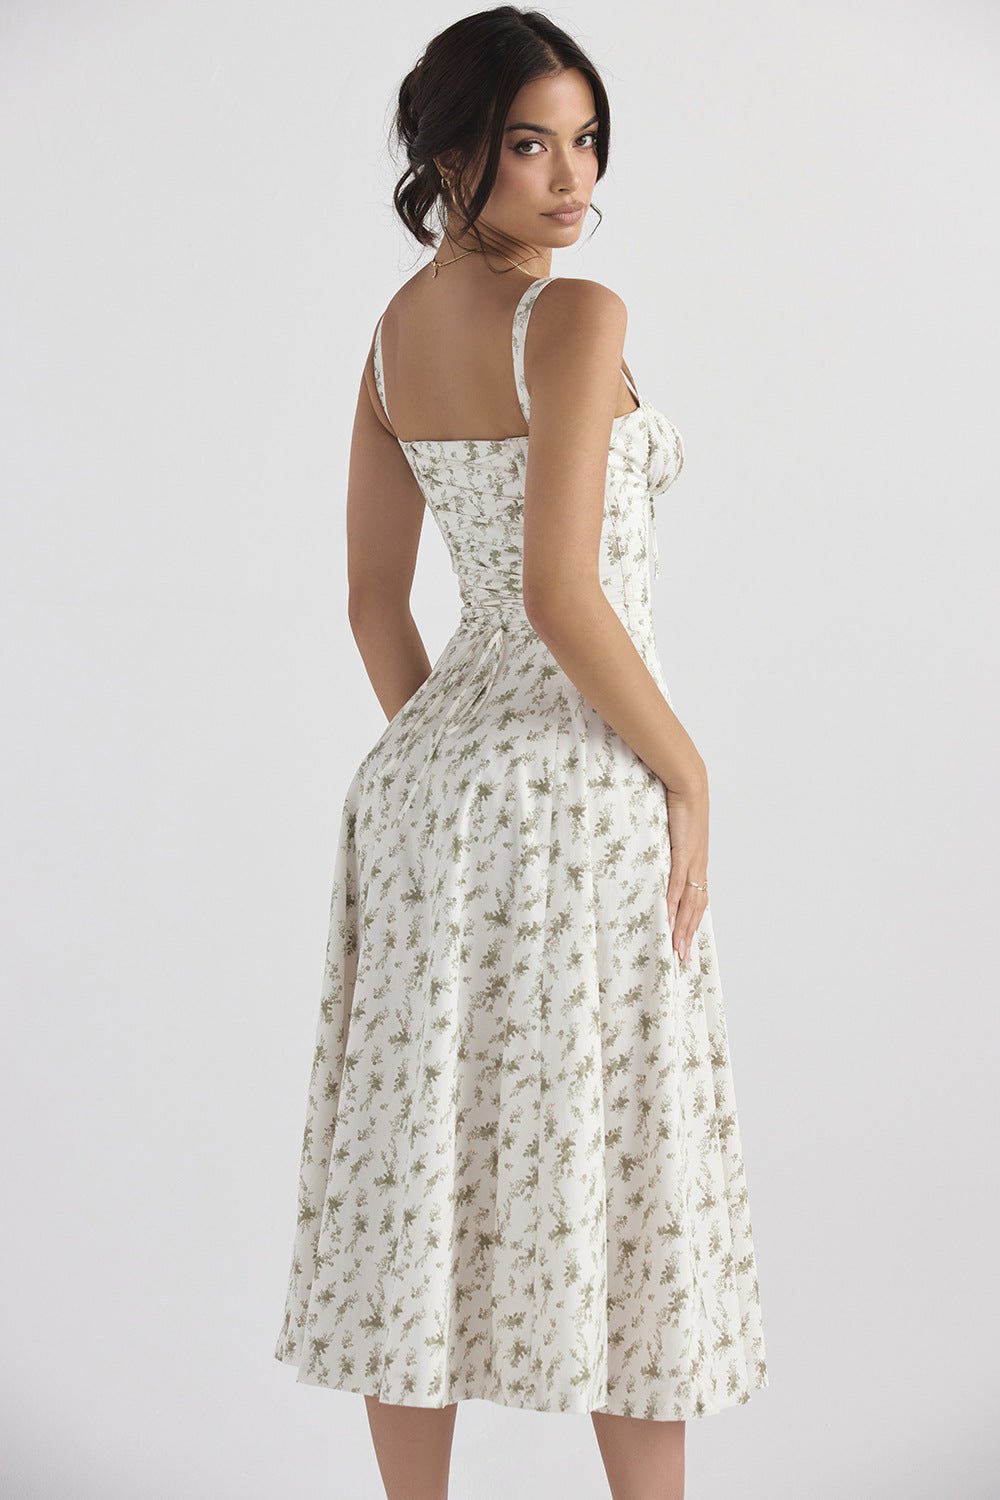 Elegant Floral Print Split Dresses S-5XL | Fashionsarah.com